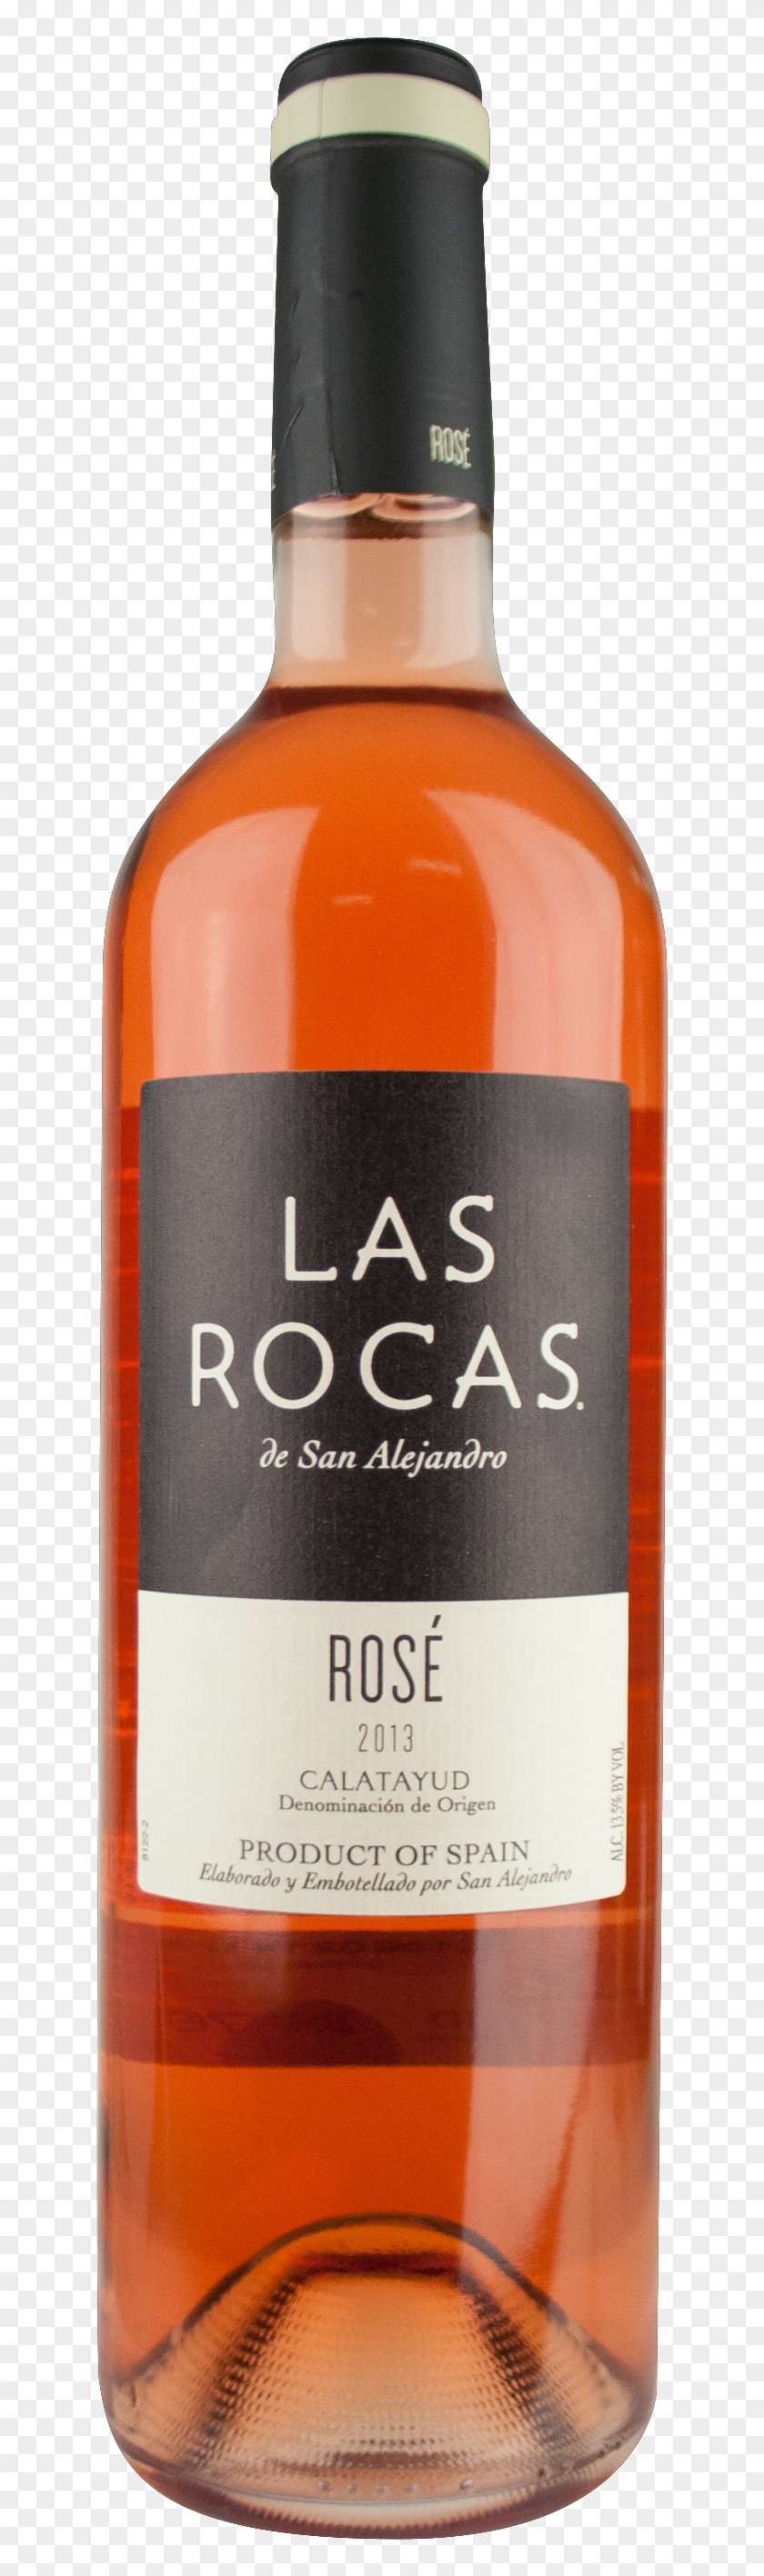 Iphone Label Thumb - Las Rocas Rose Clipart #4961625